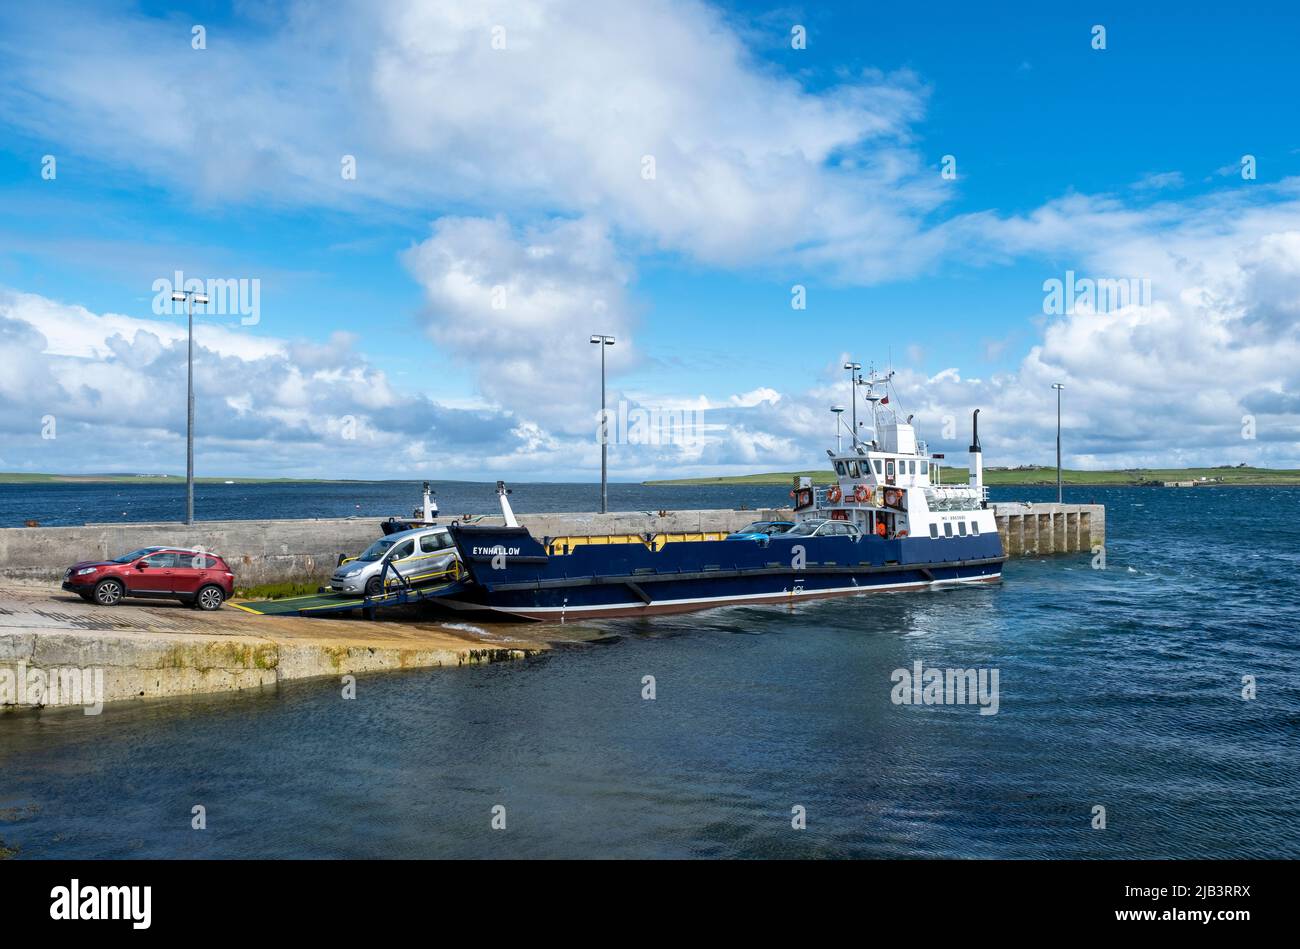 The Eynehallow ferry arrives at Brinian on the Island of Rousay, Orkney Islands, Scotland. Stock Photo